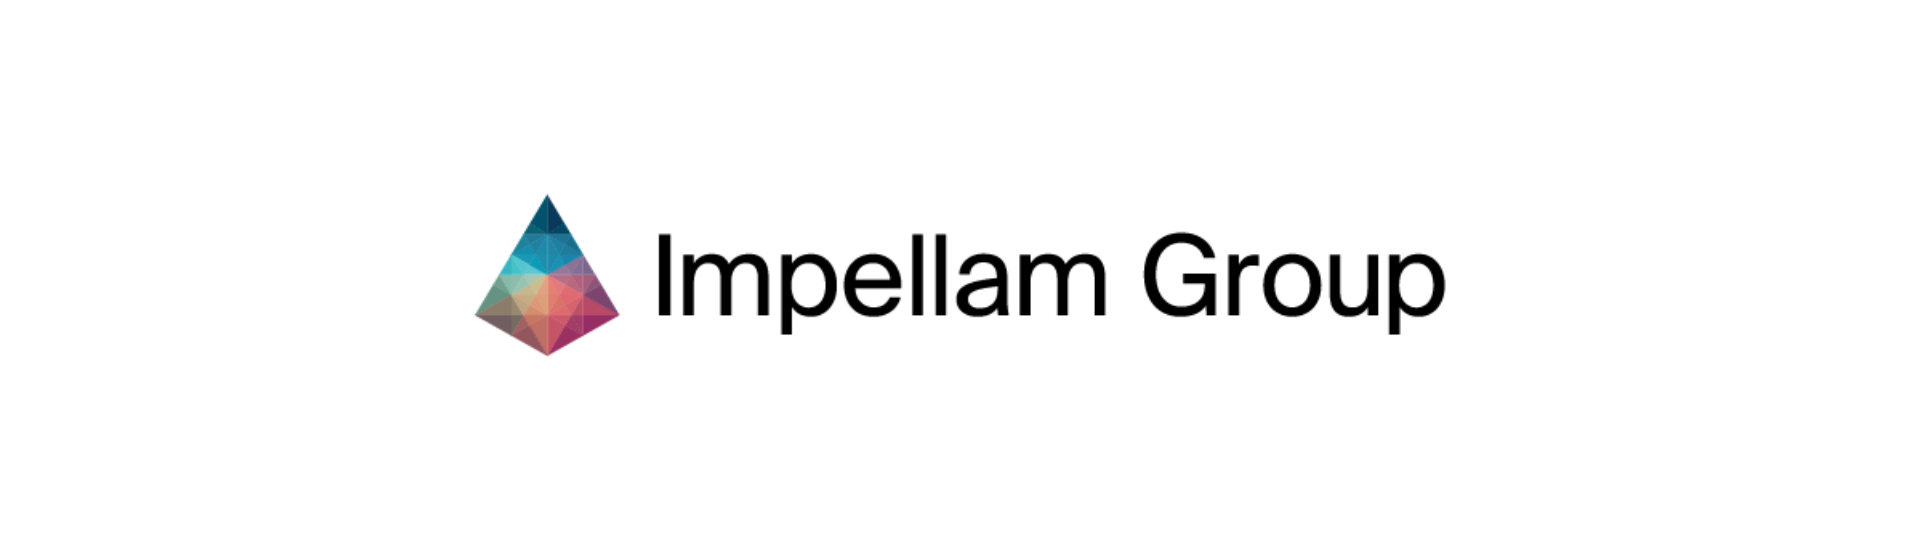 Impellam Group logo